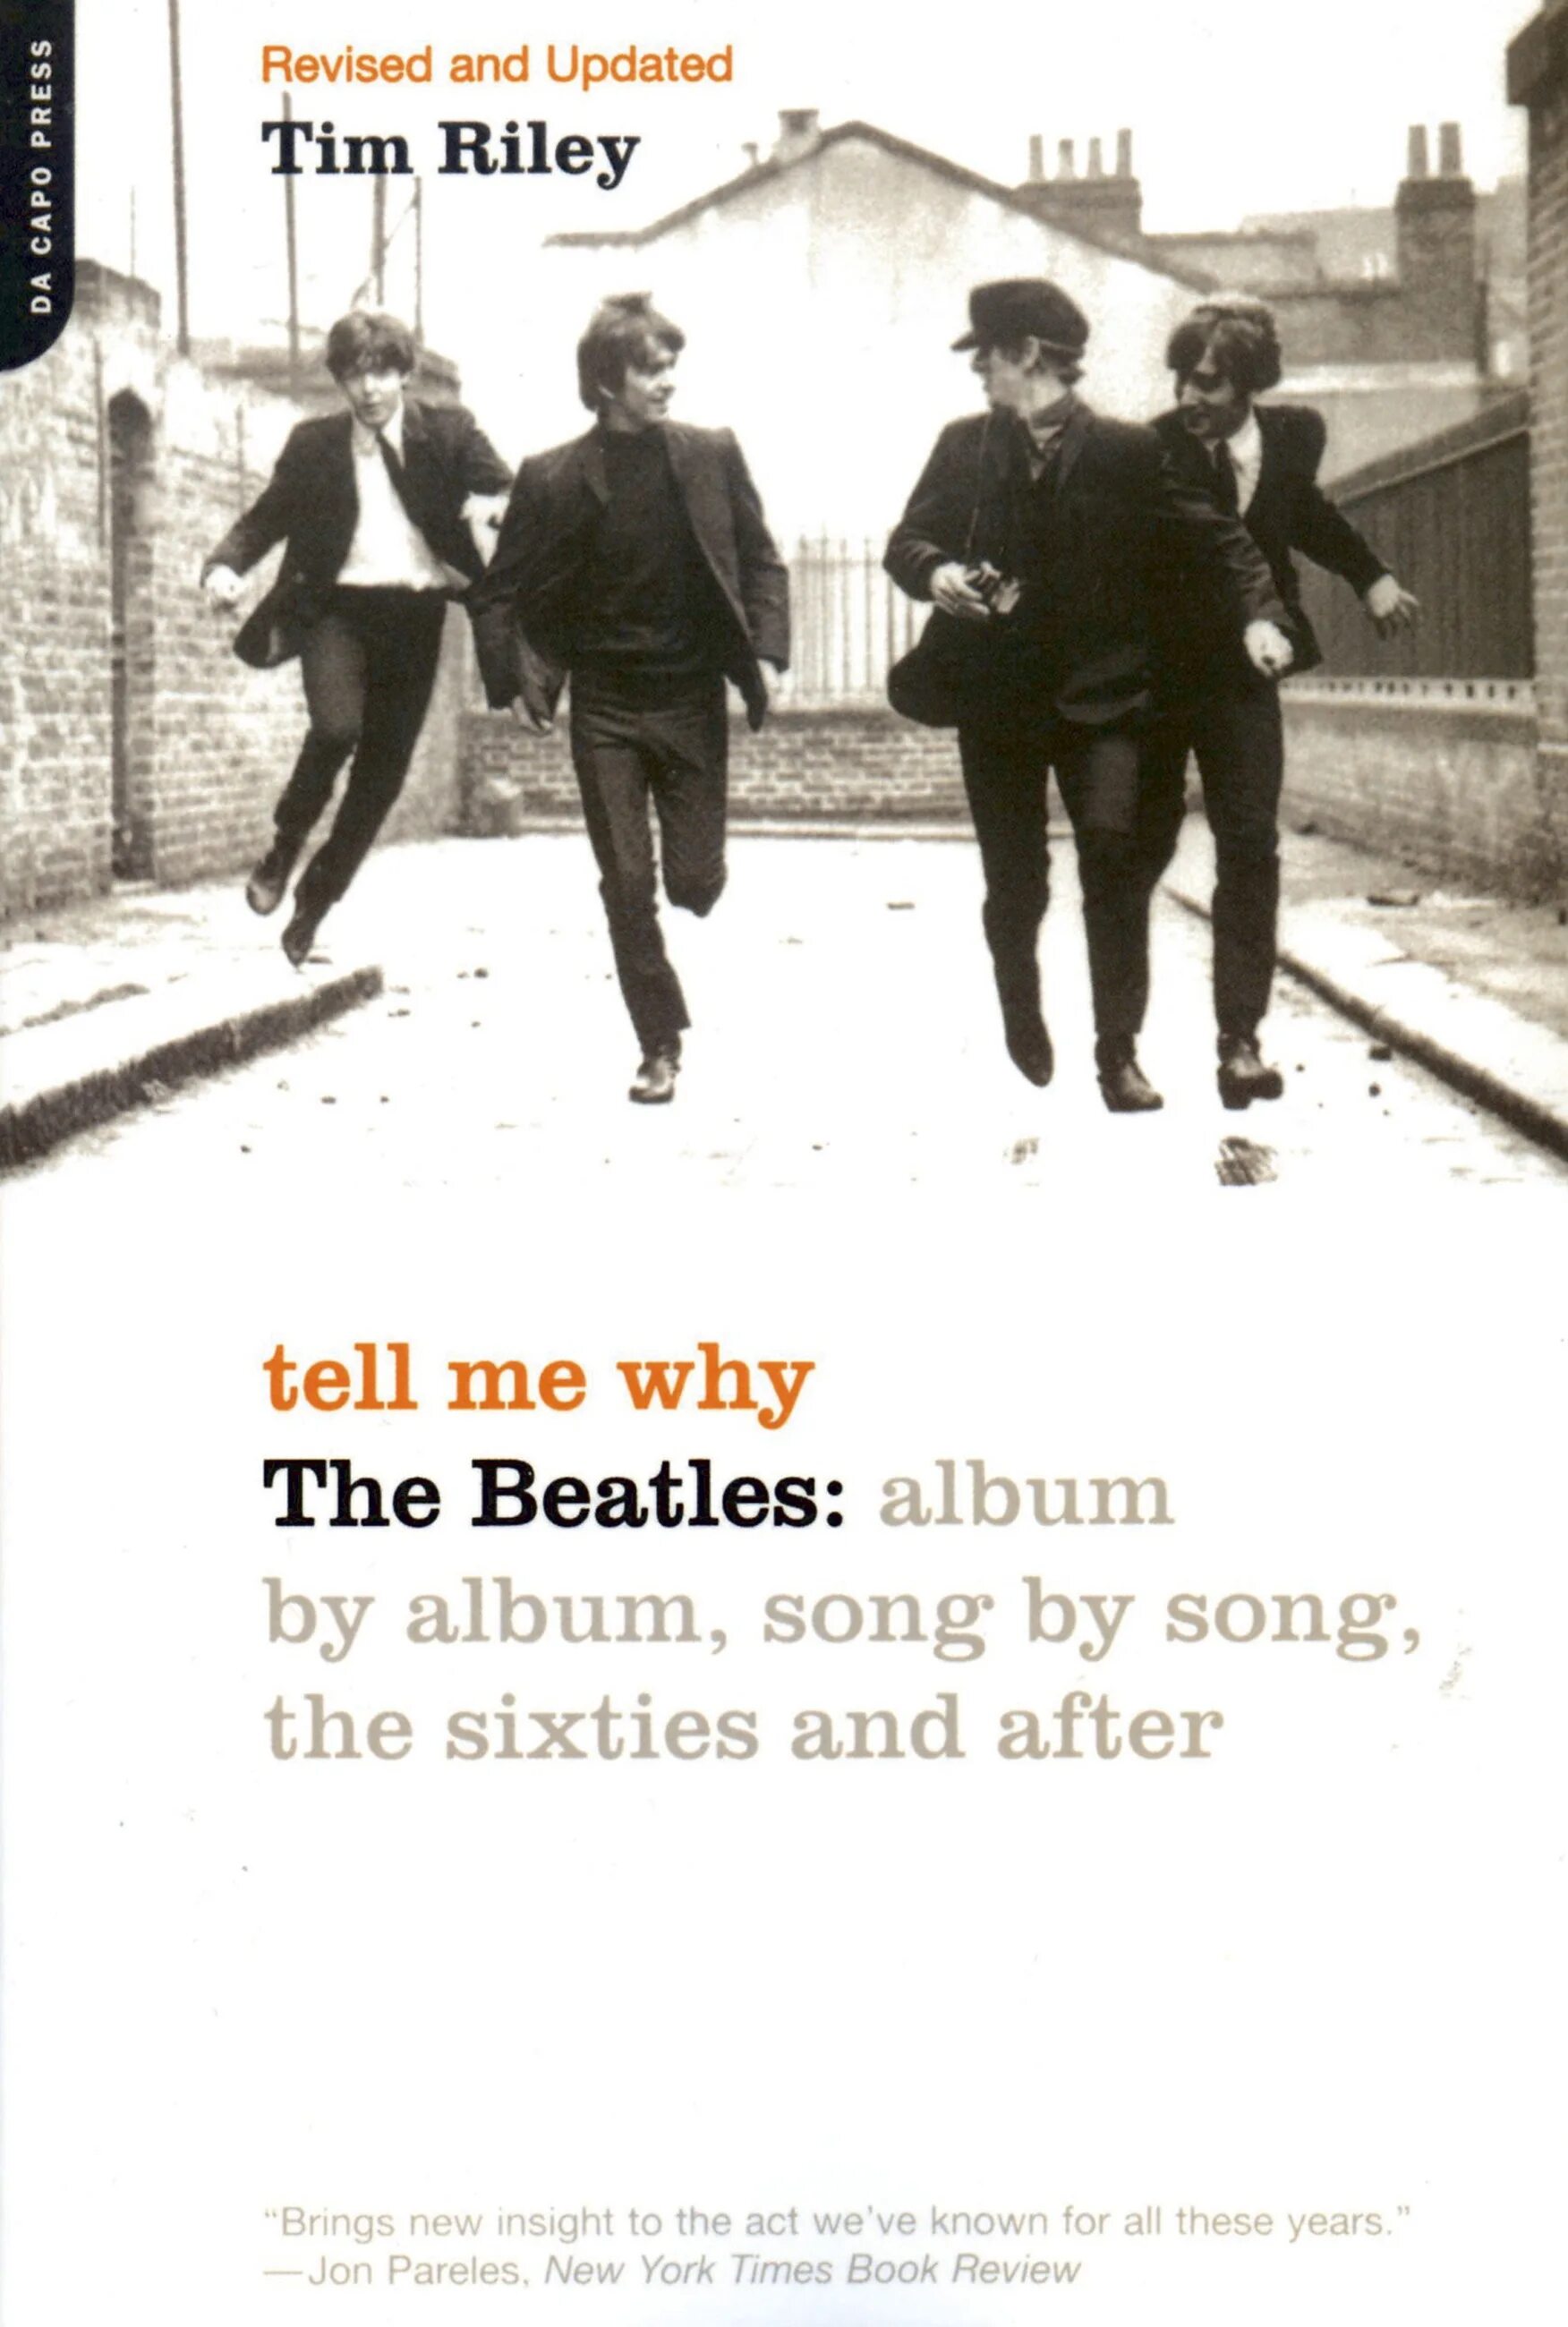 Tell me why песня перевод. Tell me why?. Tell me why Song. Tell me why песня. The Beatles книги.